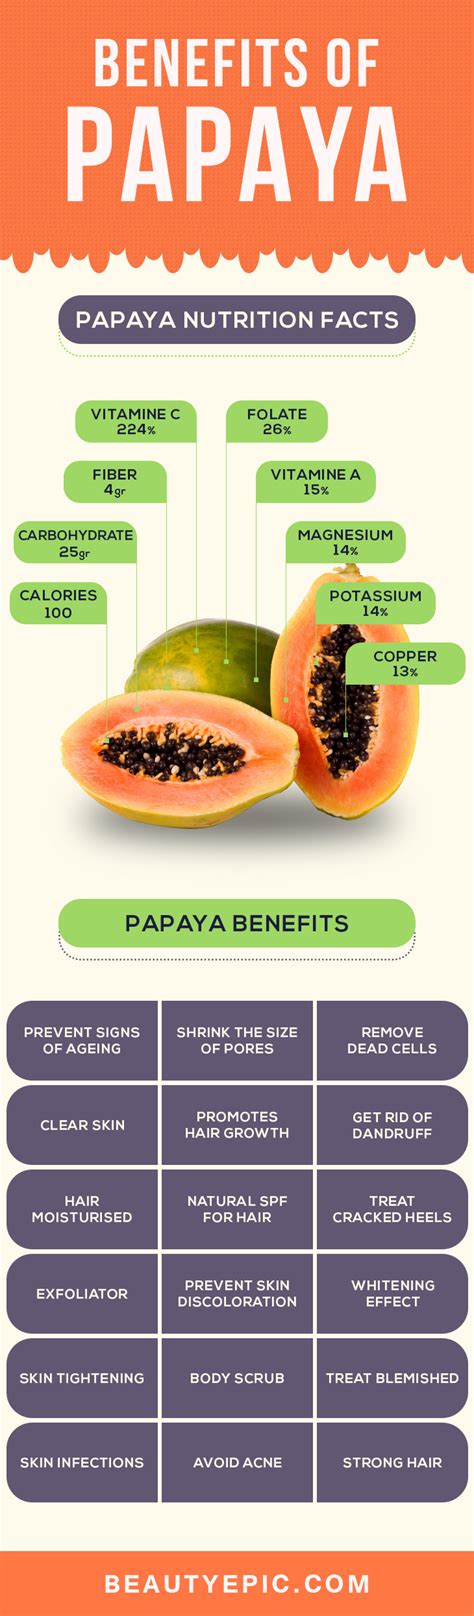 50 Amazing Benefits Of Papaya For Health And Beauty Beauty Epic